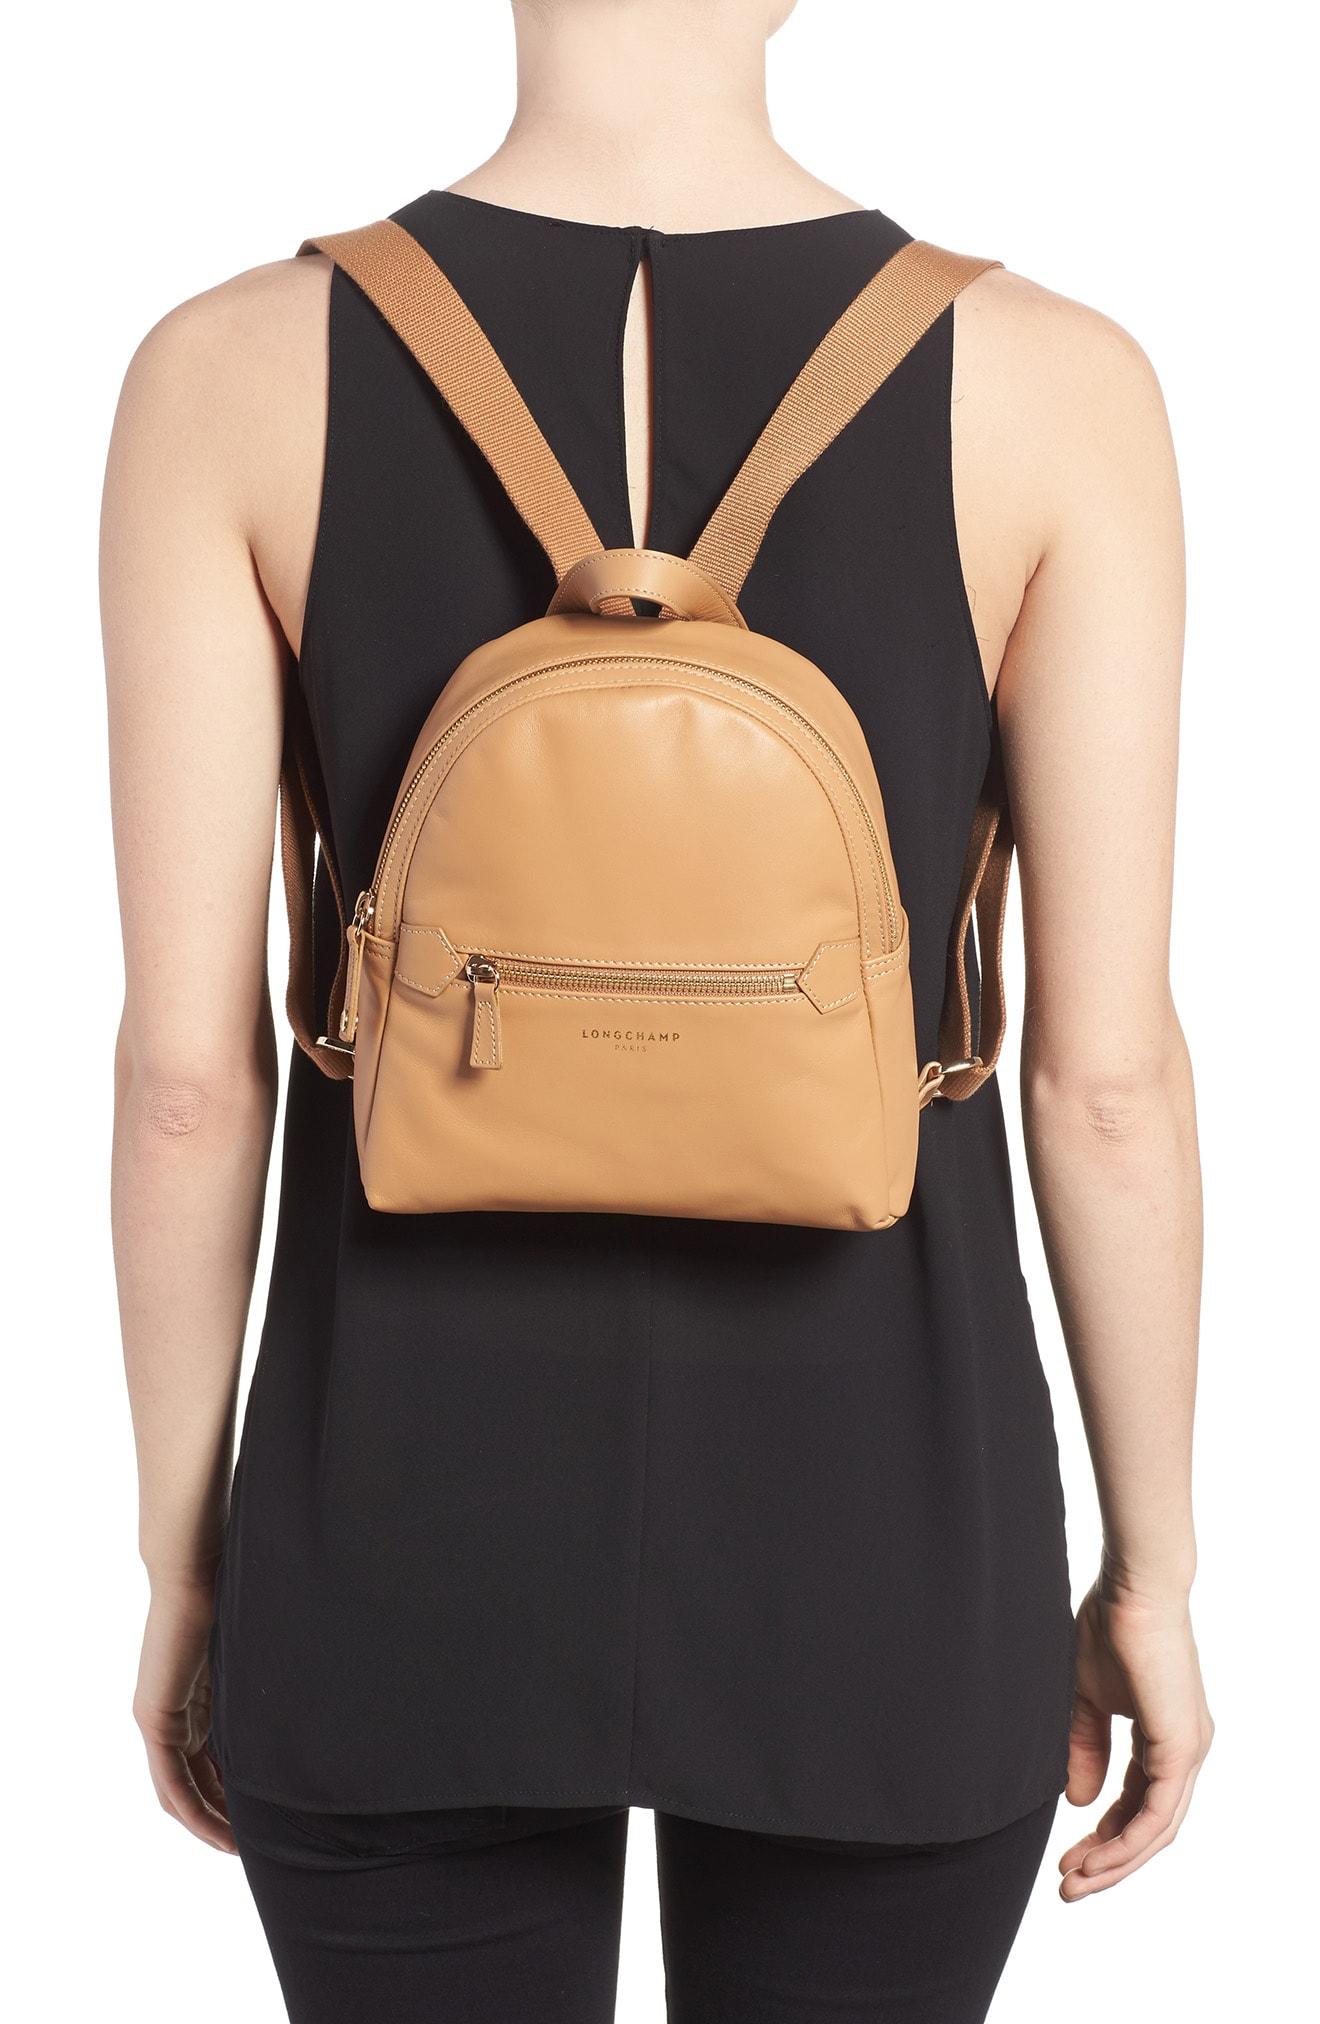 longchamp 2.0 leather backpack